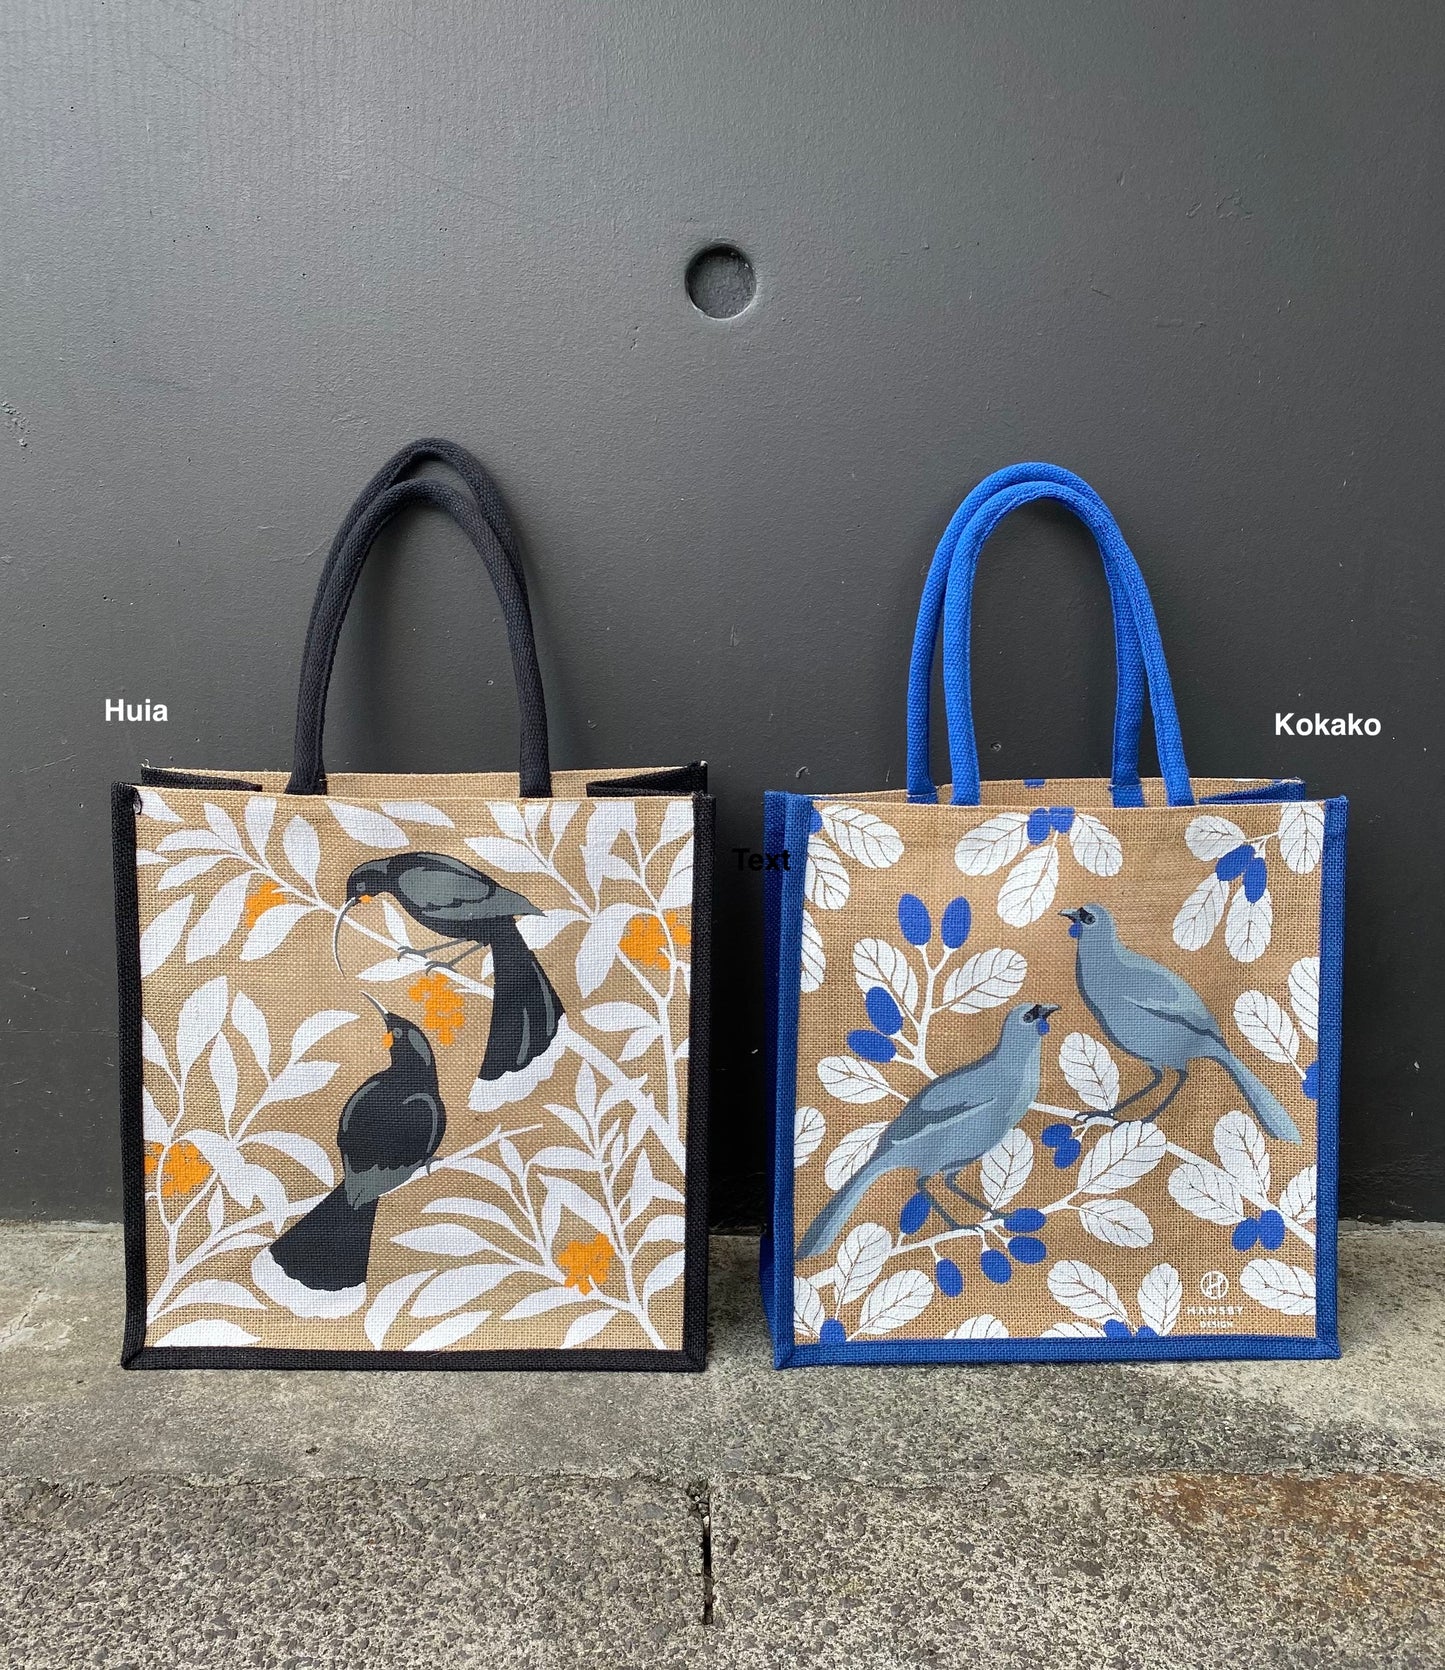 Huia and Kokako design jute bags by Hansby Design, New Zealand artist